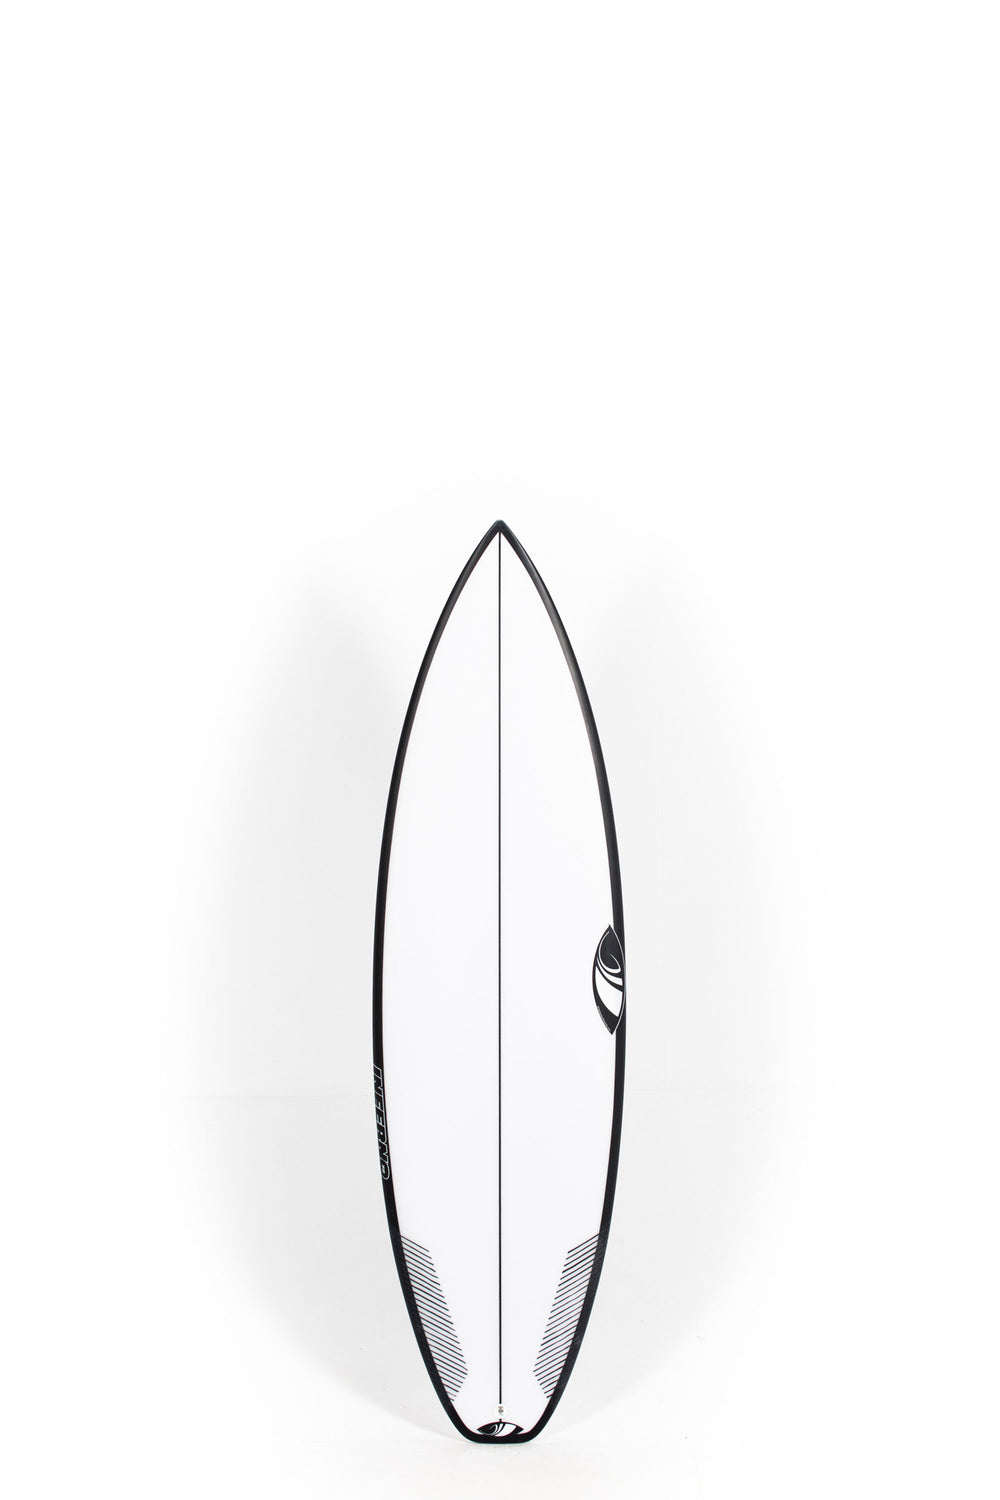 Pukas Surf Shop - Sharpeye Surfboards - INFERNO 72 PRO by Marcio Zouvi - 5'8